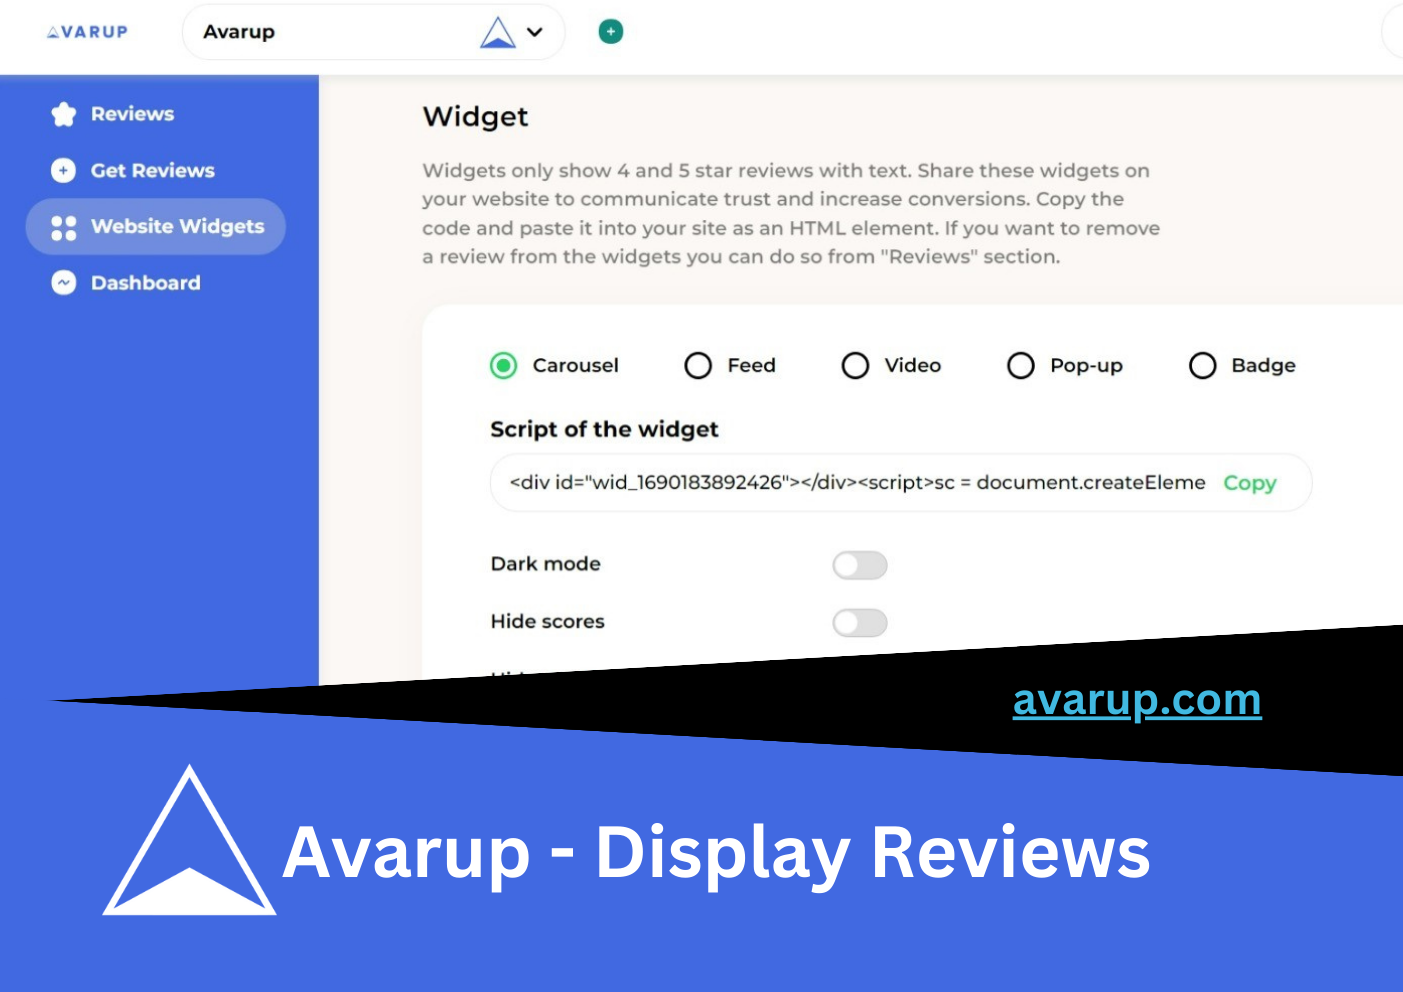 Avarup - Display Reviews